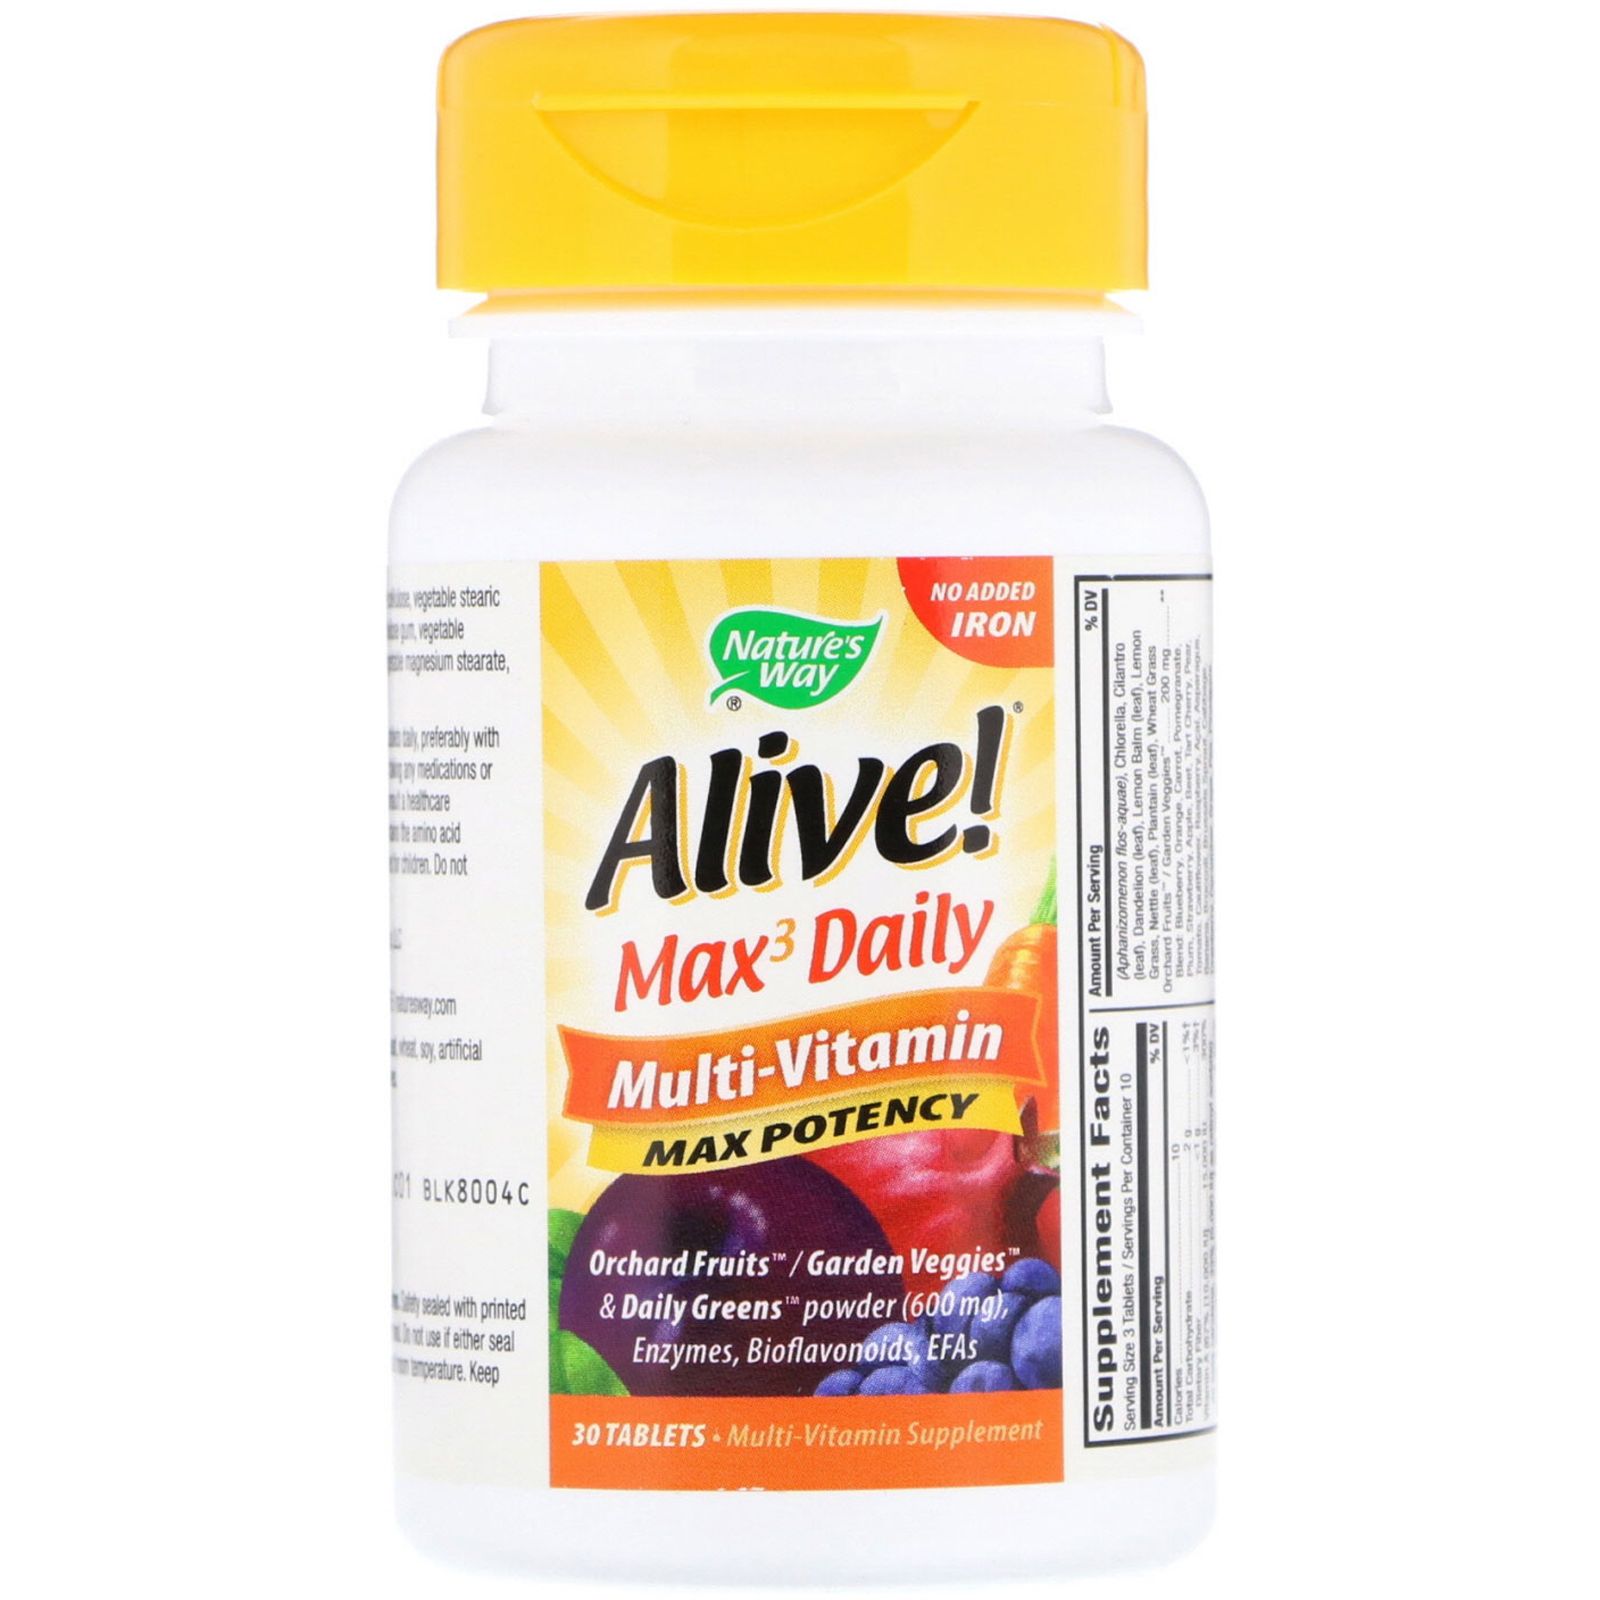 Vitamin max. Max3 Daily, мультивитамины. Alive! Max3 Daily мультивитамины таб. №180. Витамины Alive Max. Айрон витамины.